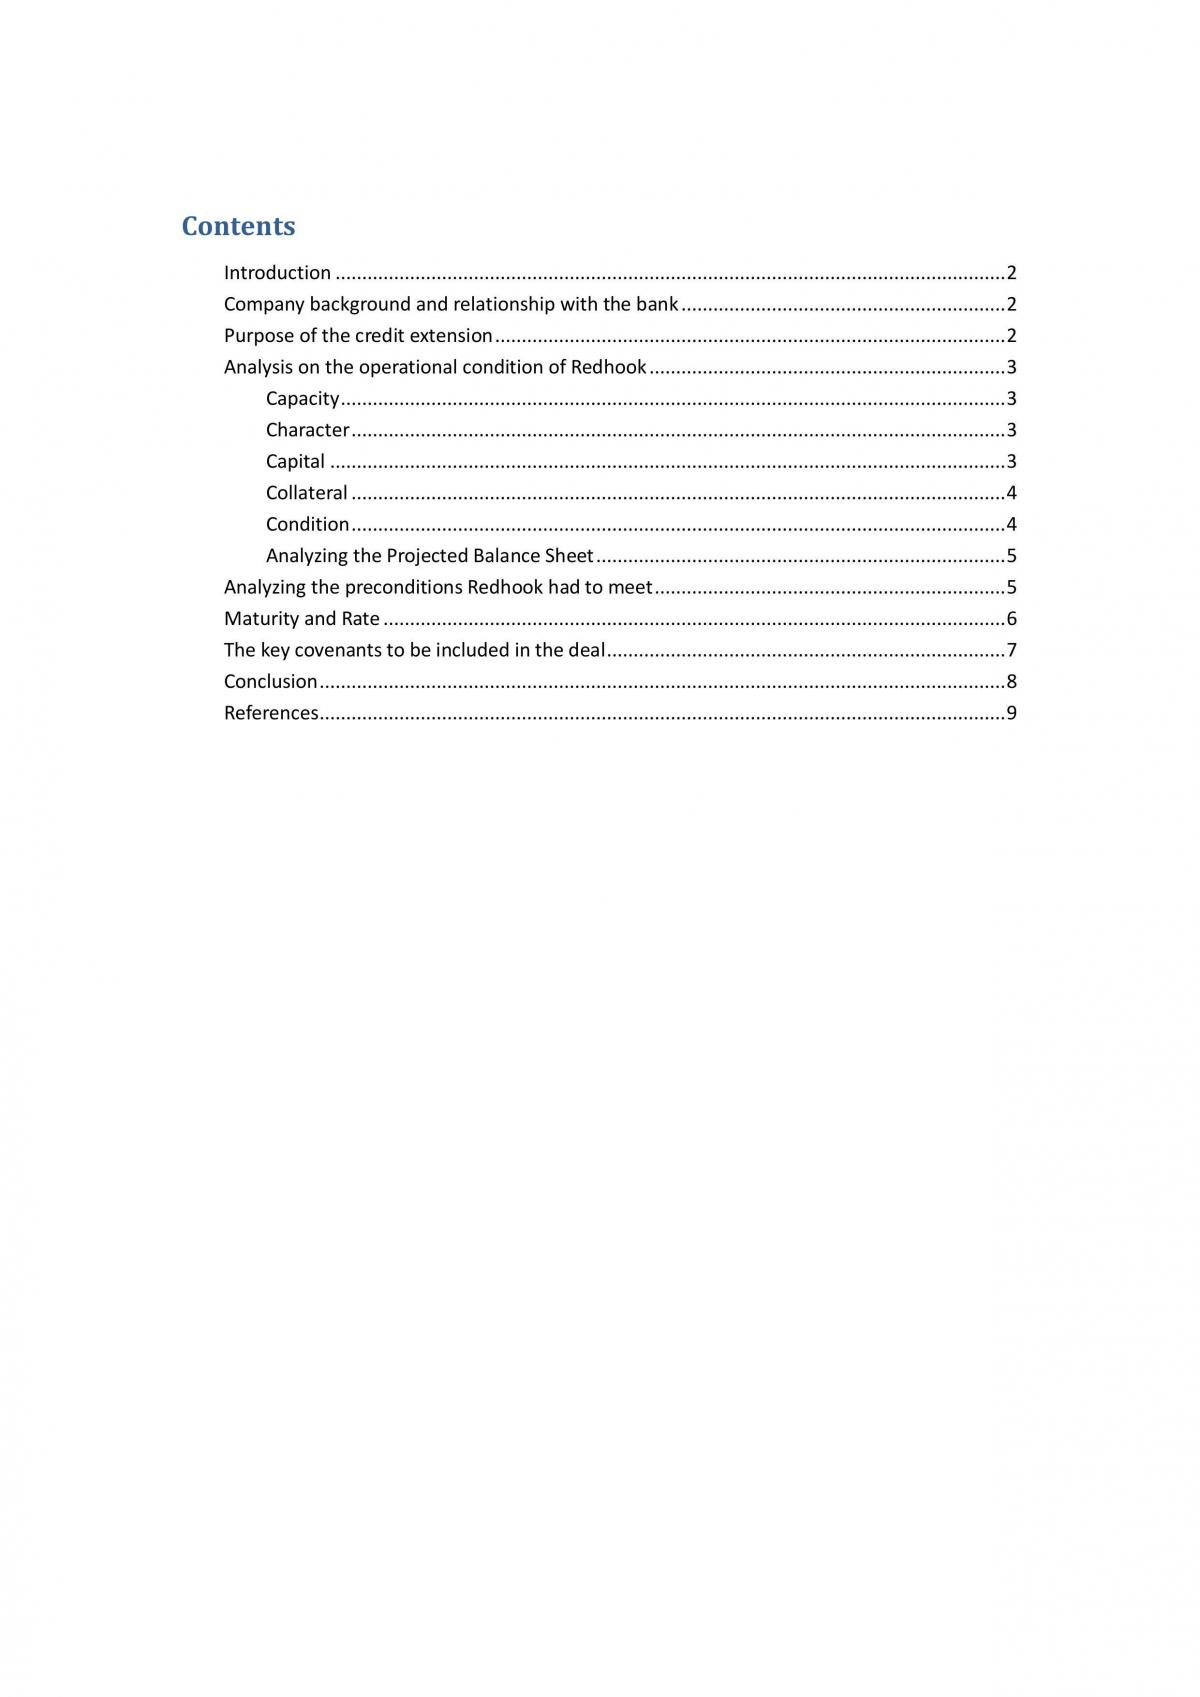 The US Bank of Washington Case Study - Page 1